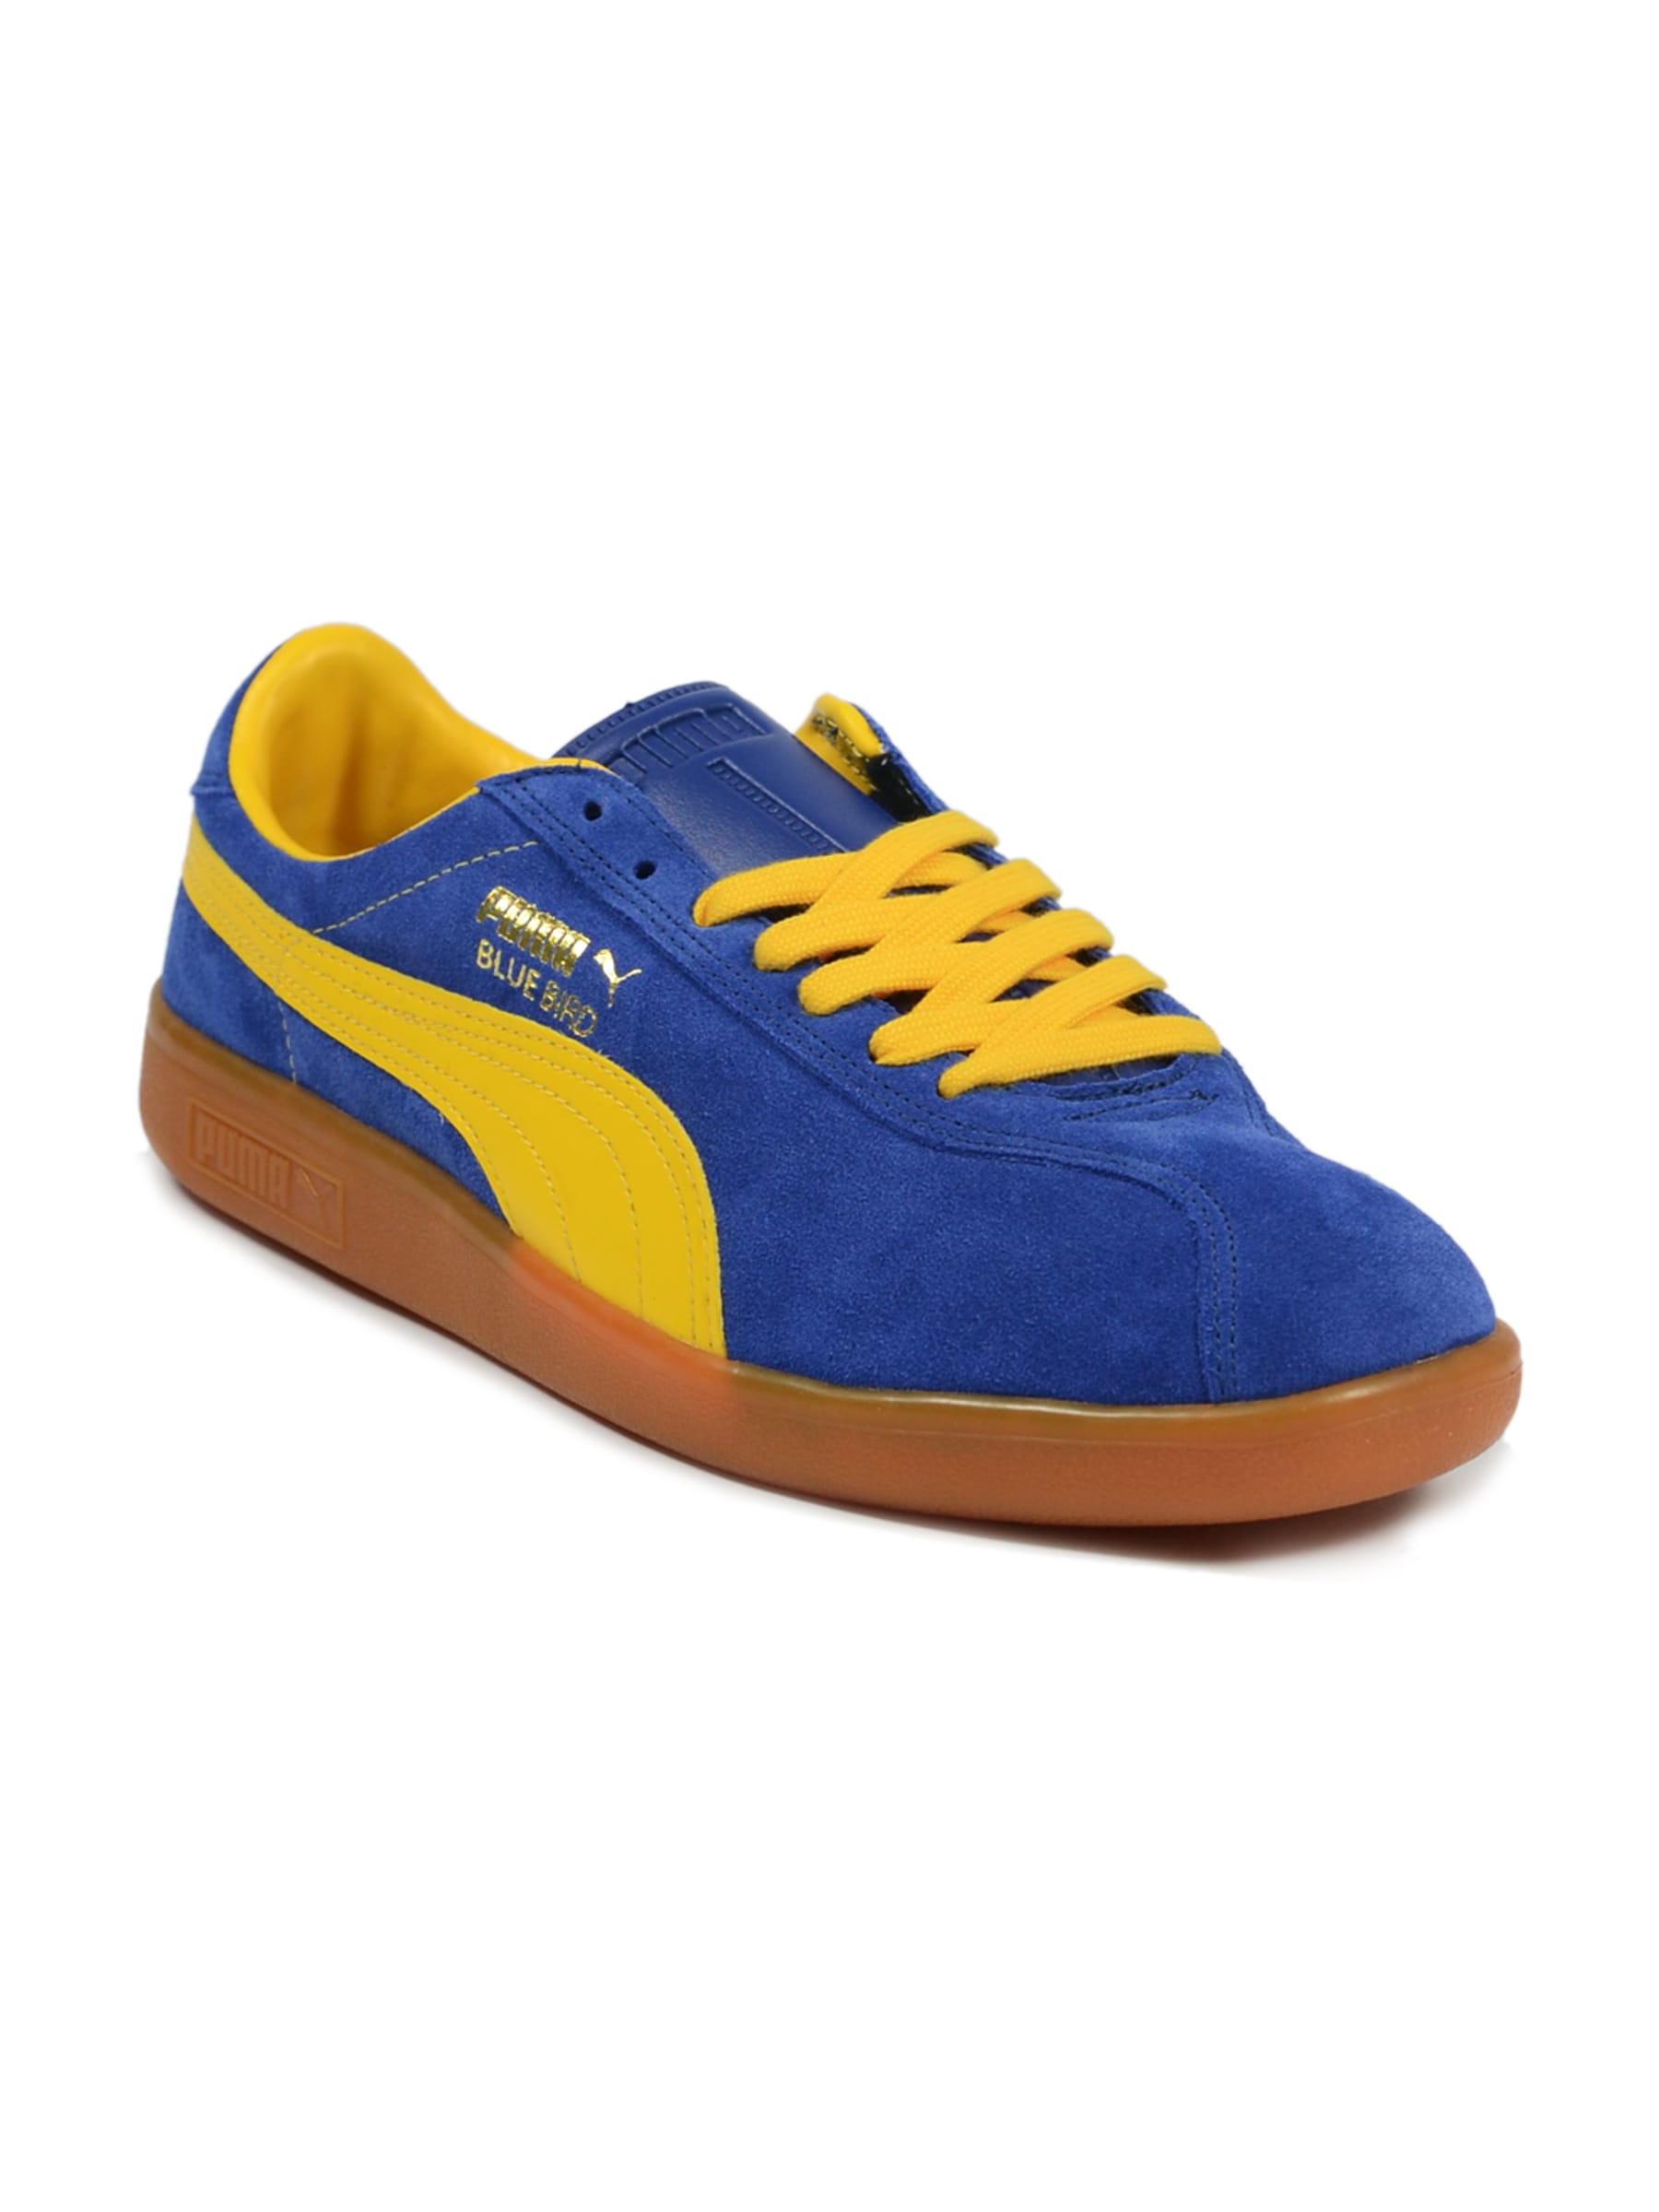 Puma Men's Bluebird Blue Yellow Shoe